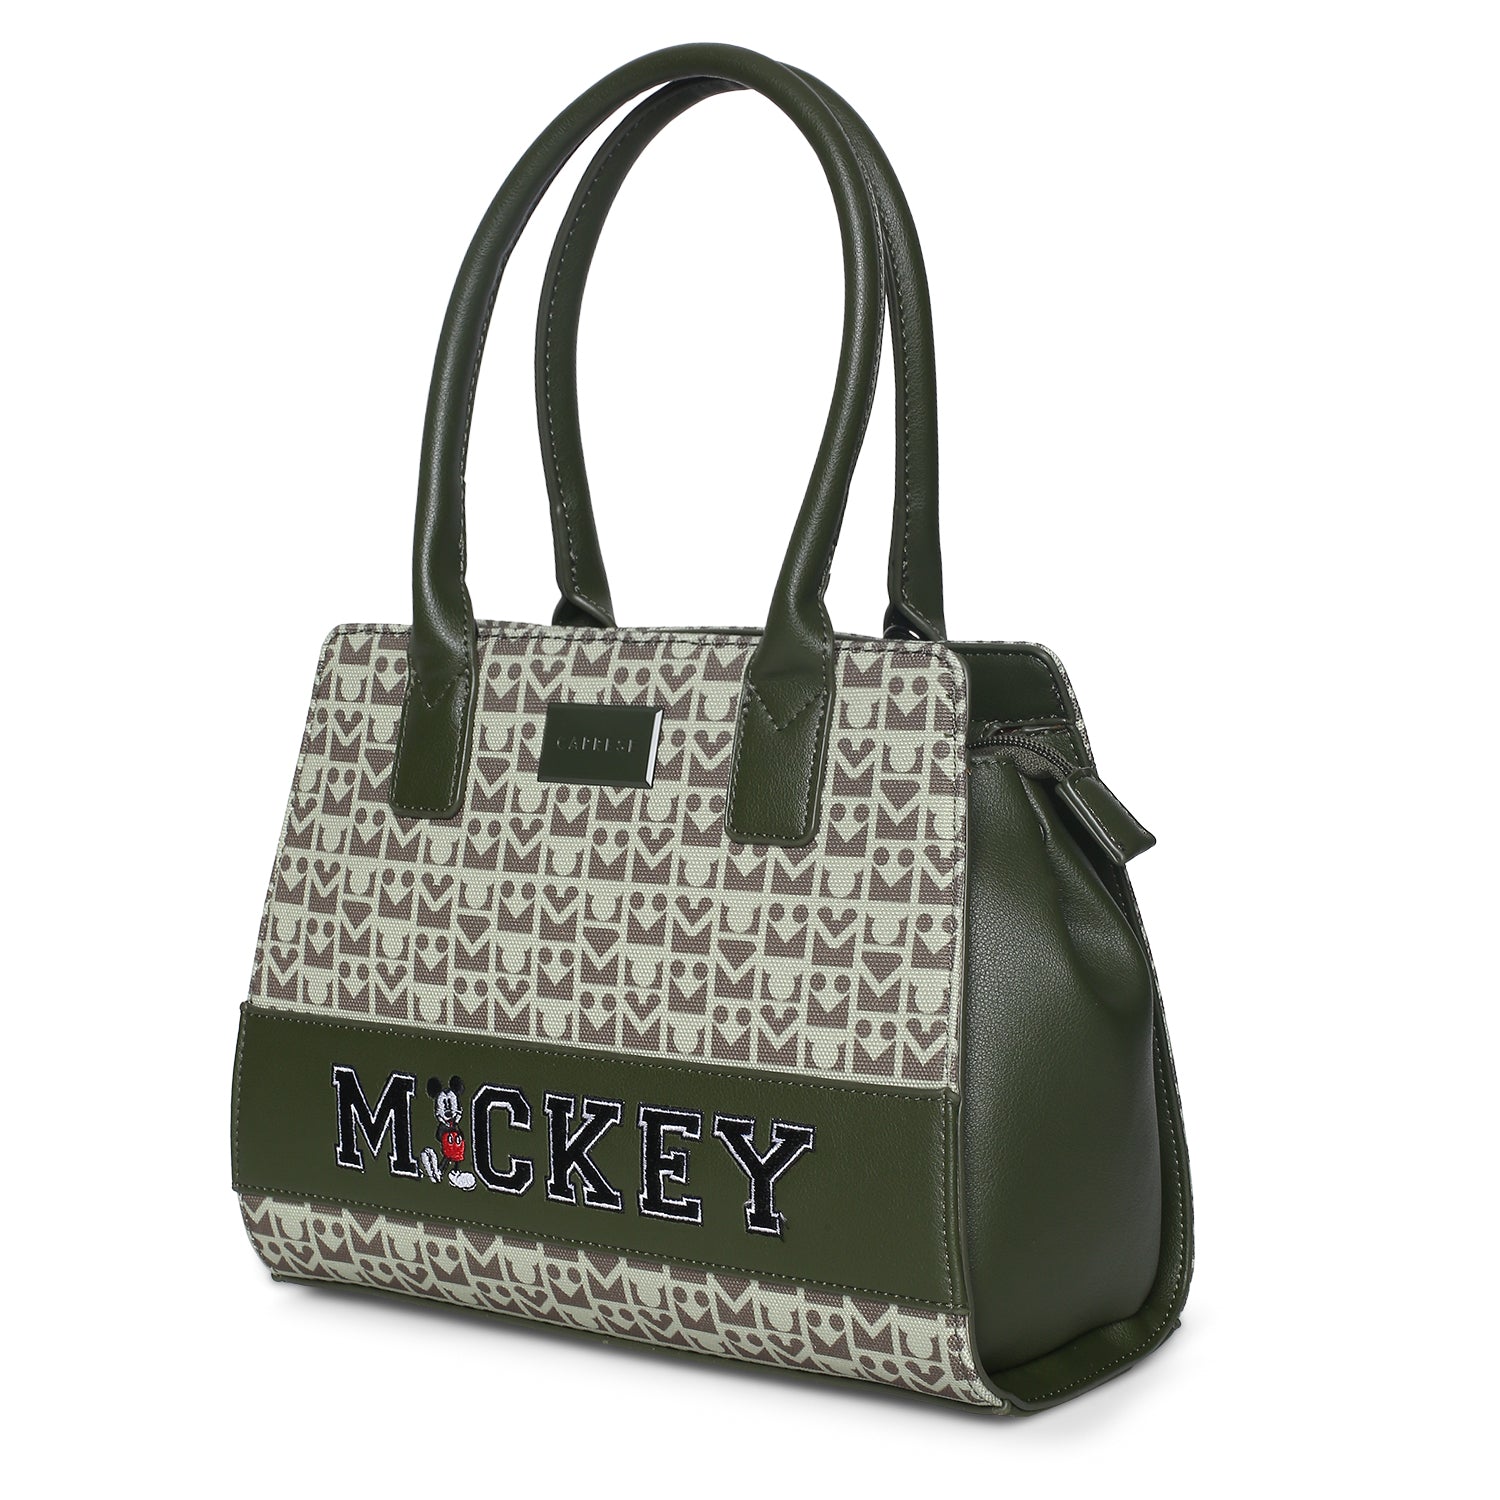 Caprese Disney Inspired Graphic Printed Mickey Mouse Collection Sling Medium Handbag